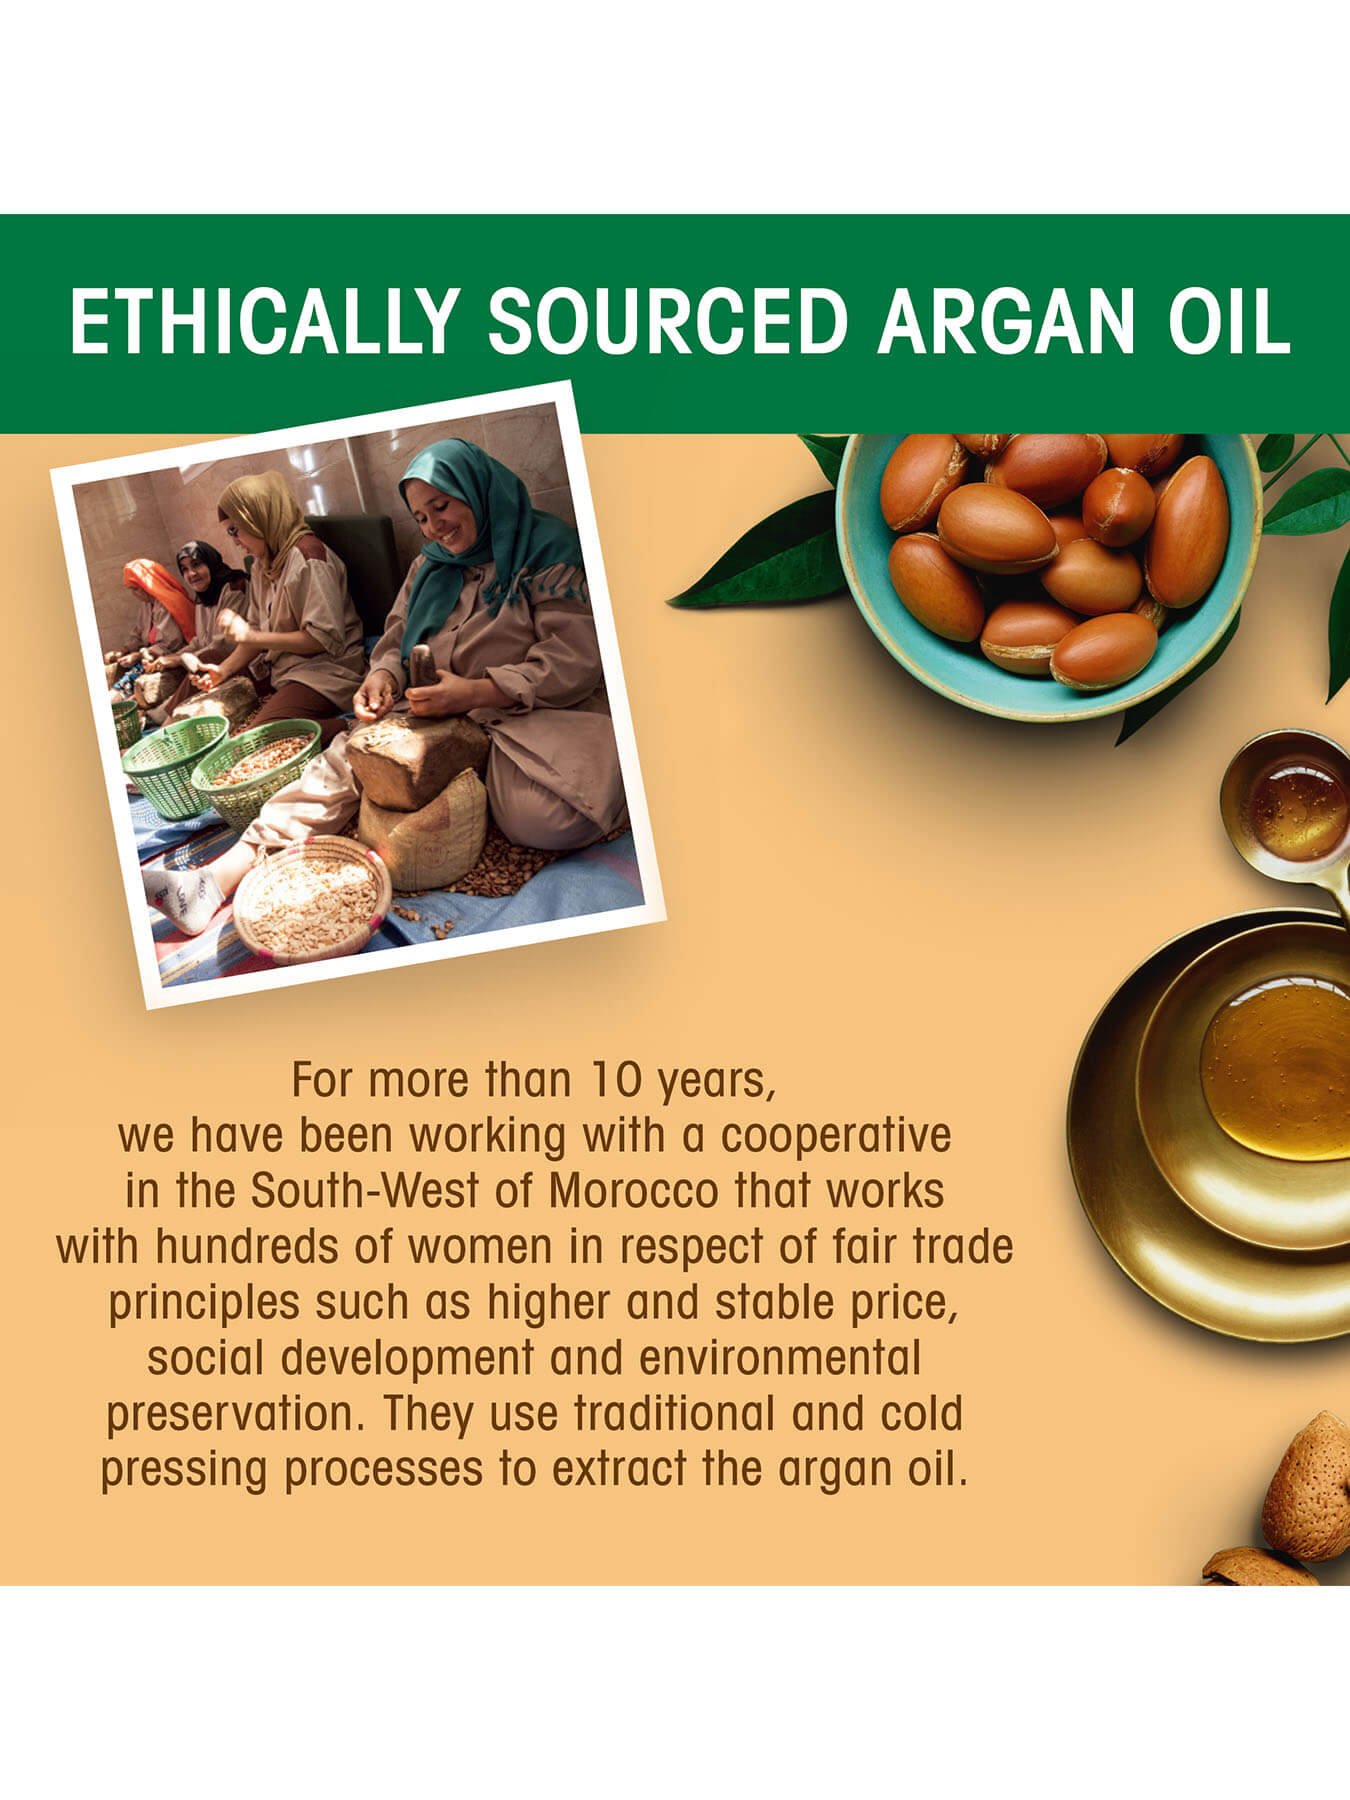 Ultimate Blends Argan Oil  ethically sourced argan oil